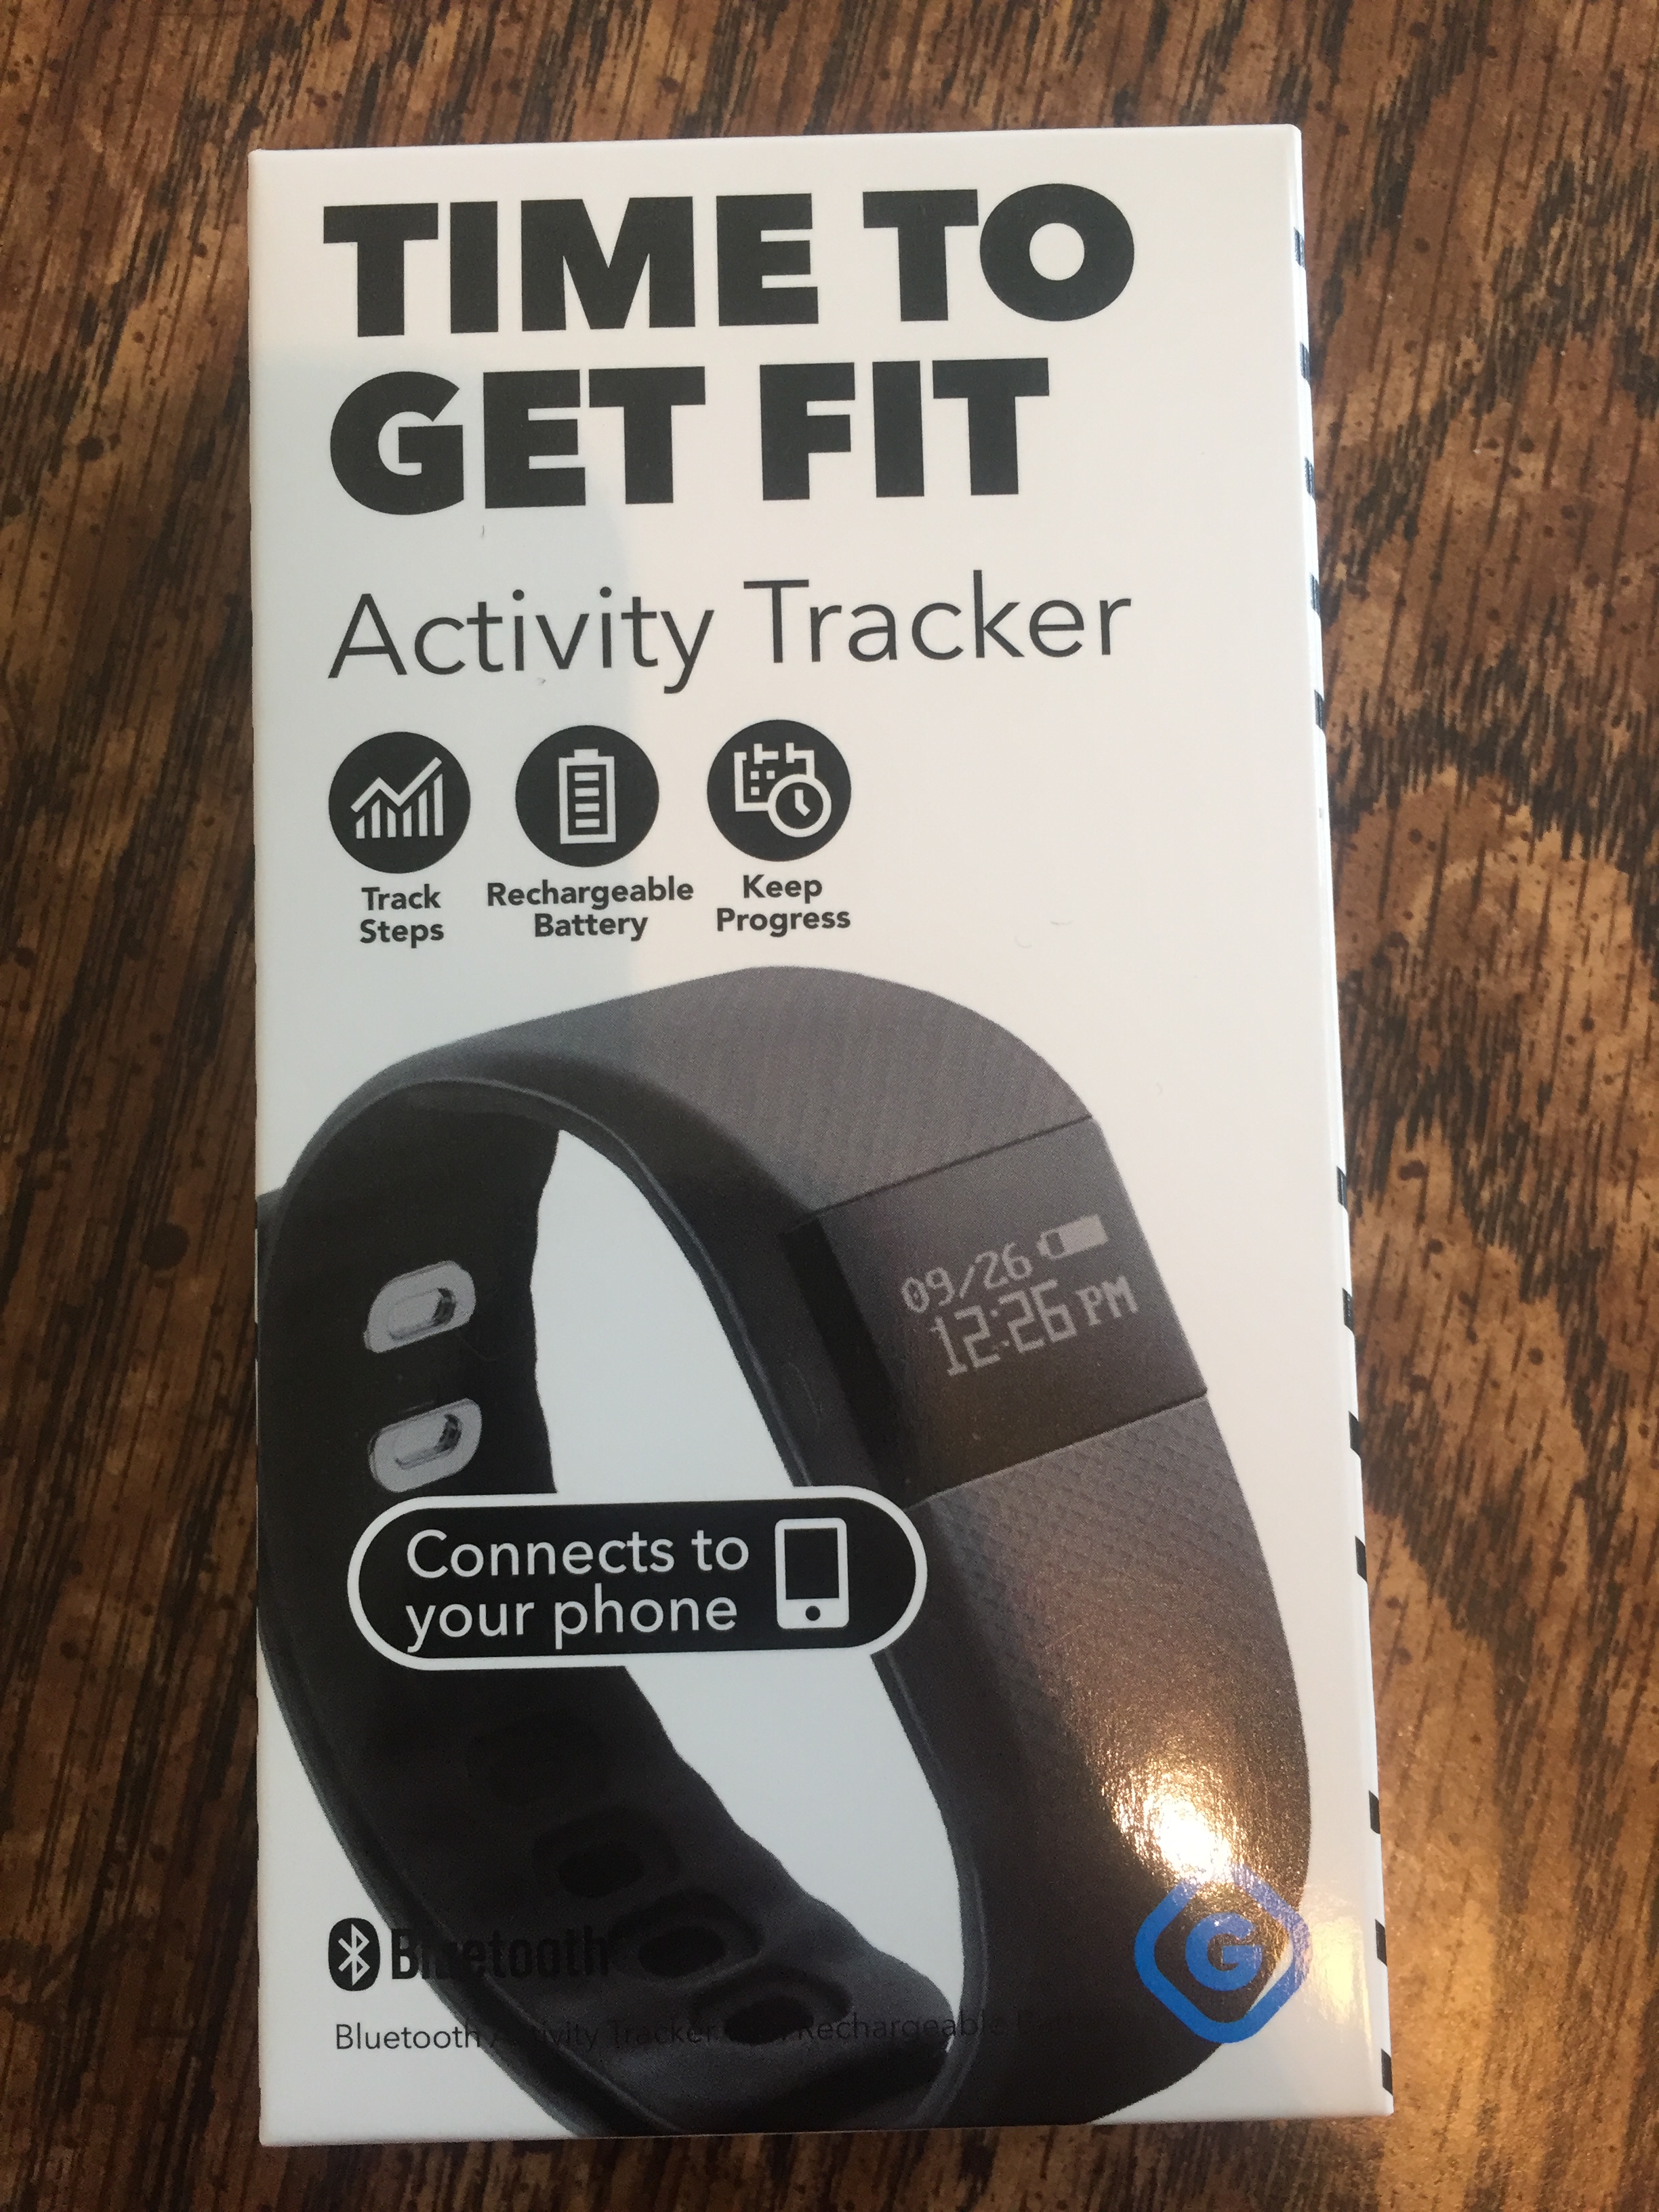 target fitness tracker $10